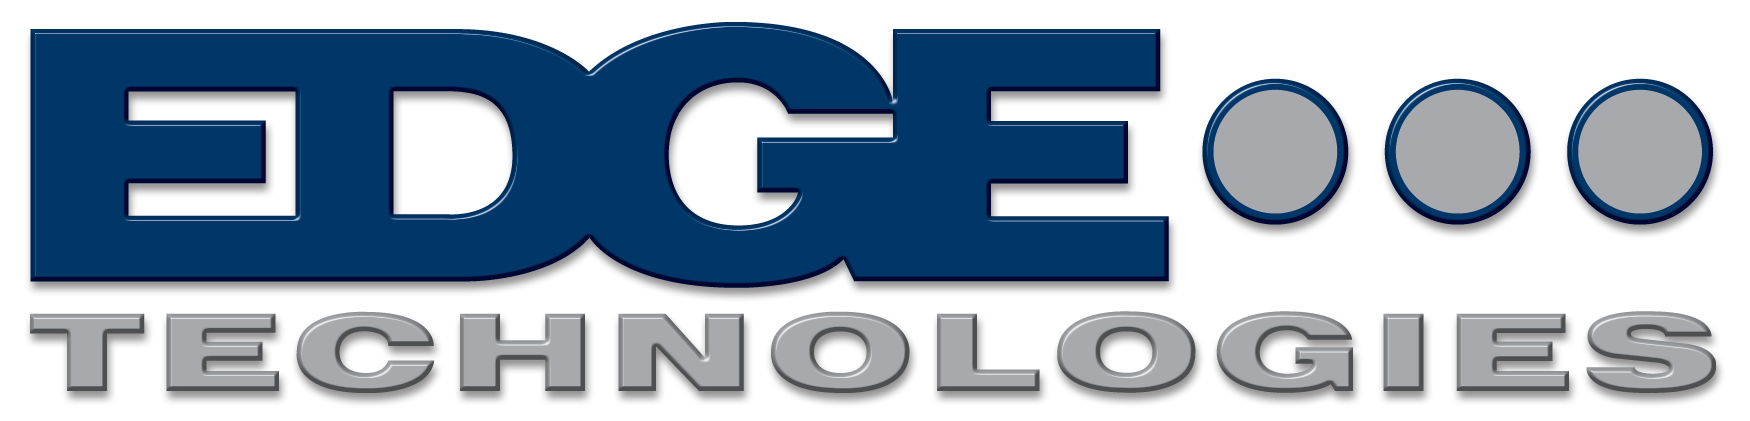 Edge Logo 2013